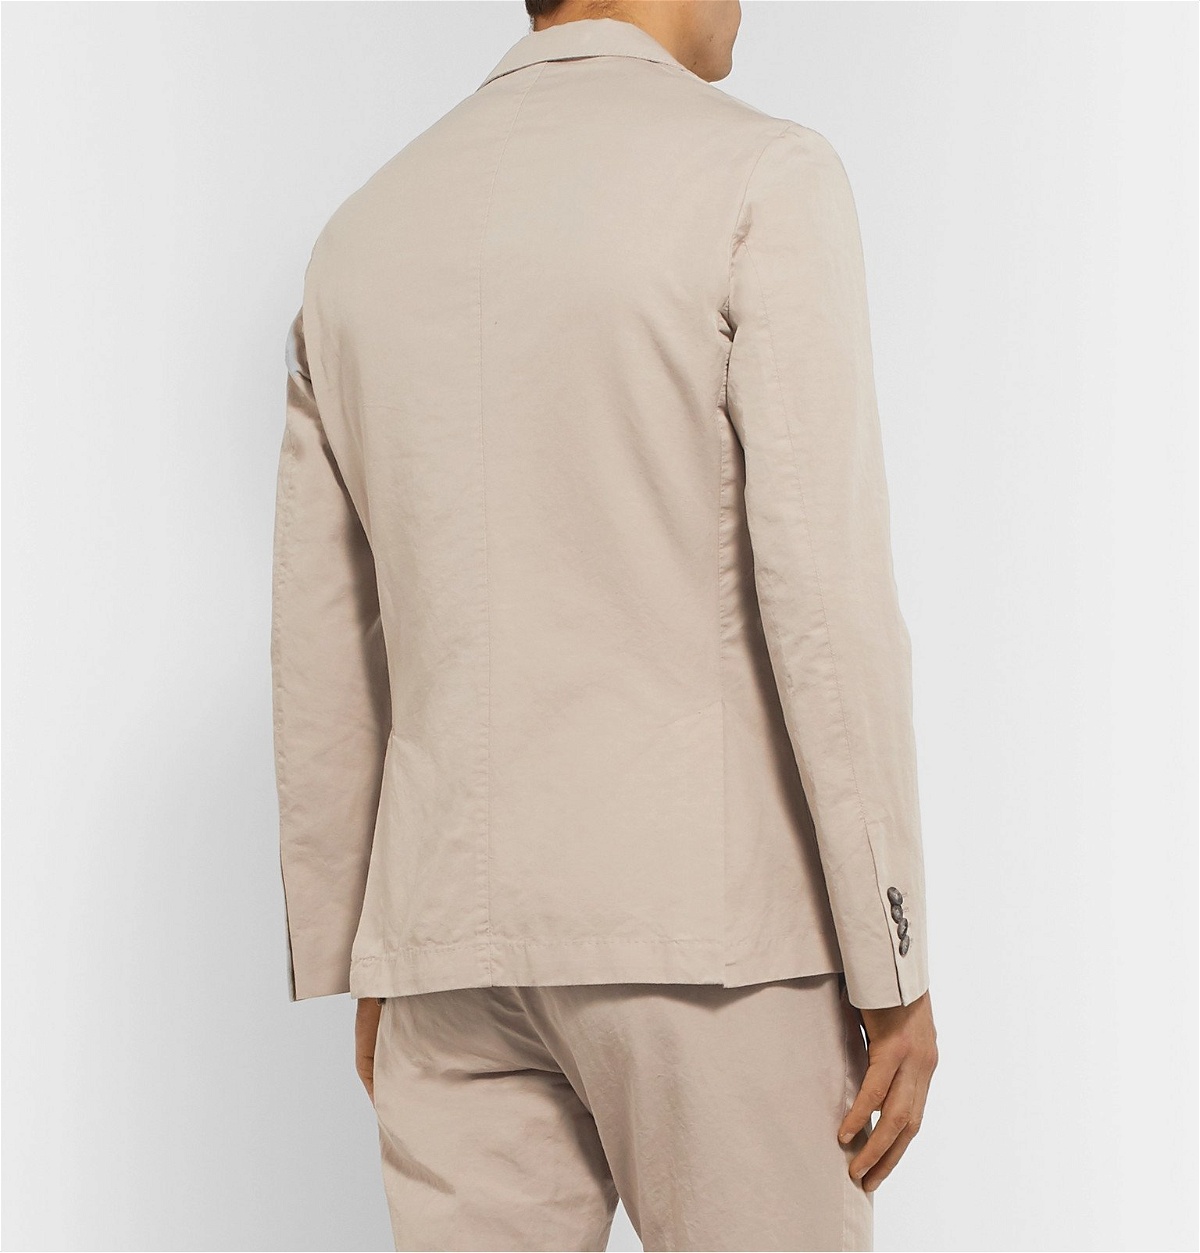 Officine Generale - Slim-Fit Garment-Dyed Cotton and Linen-Blend Suit ...